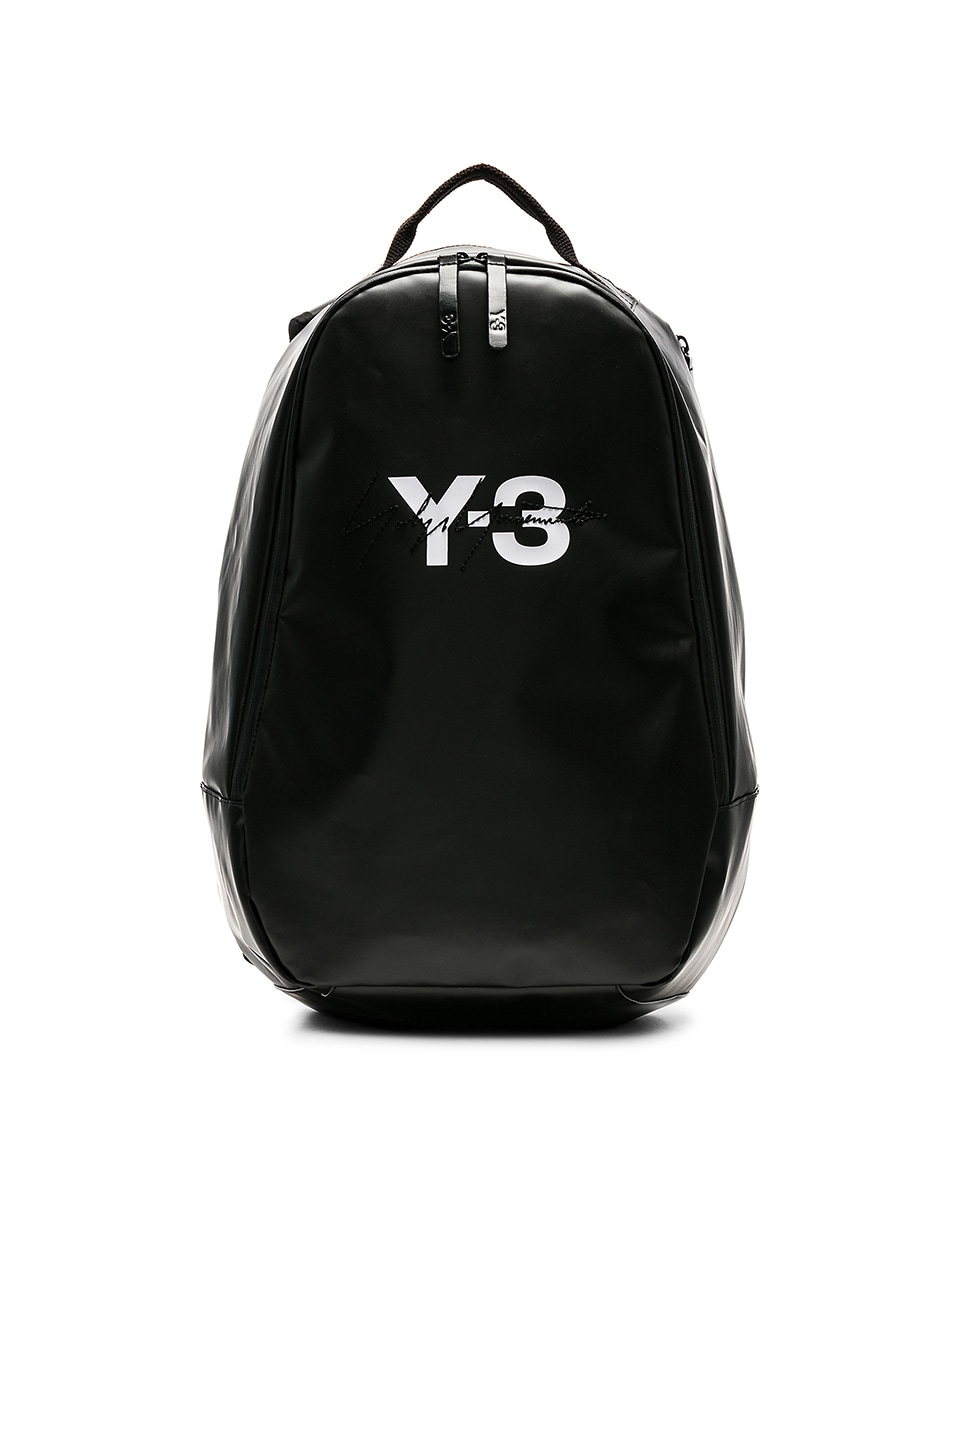 y3 bag cheap online